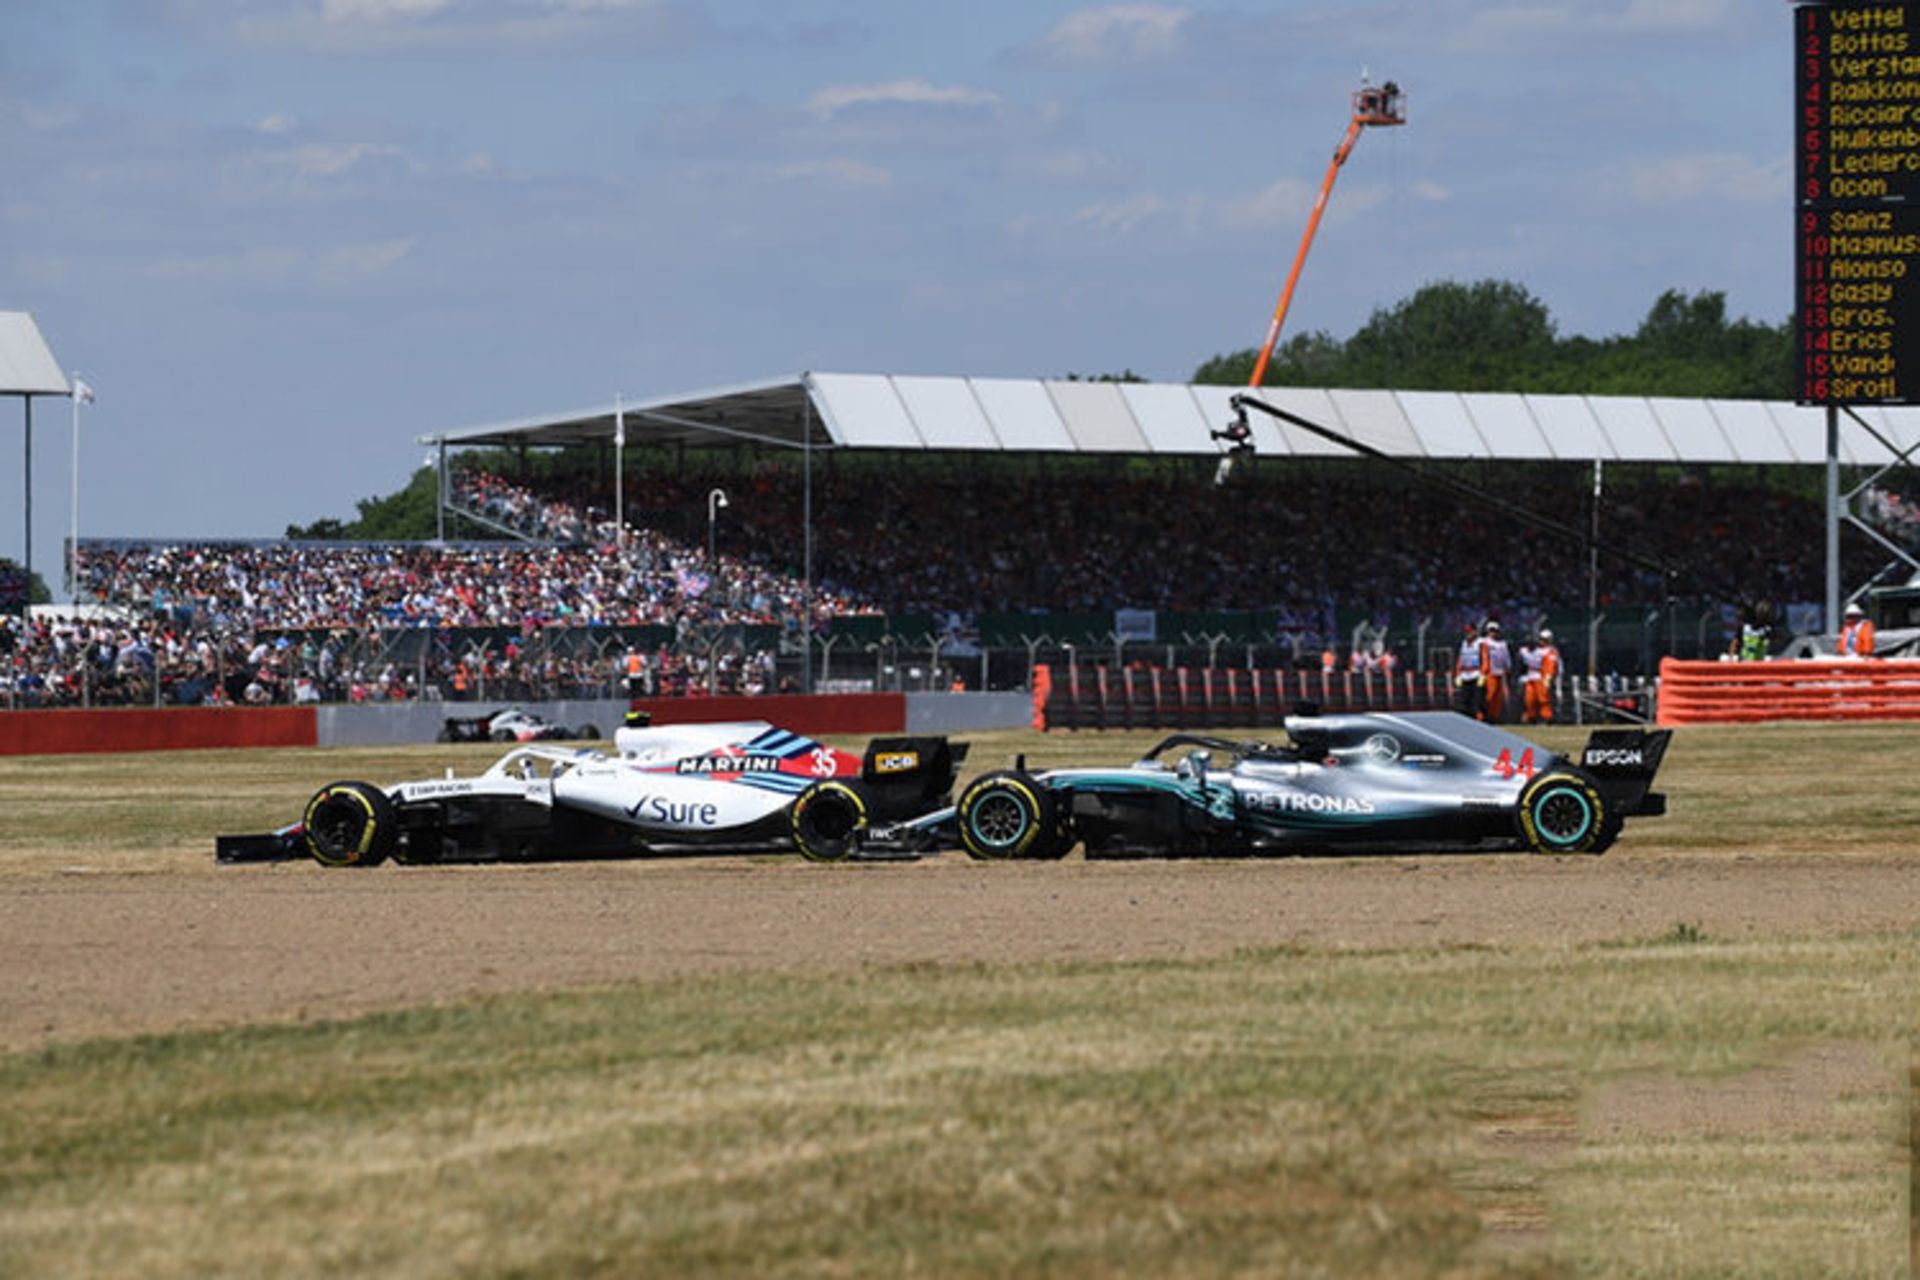 British Grand Prix formula 1 / گرندپری فرمول یک بریتانیا 2018